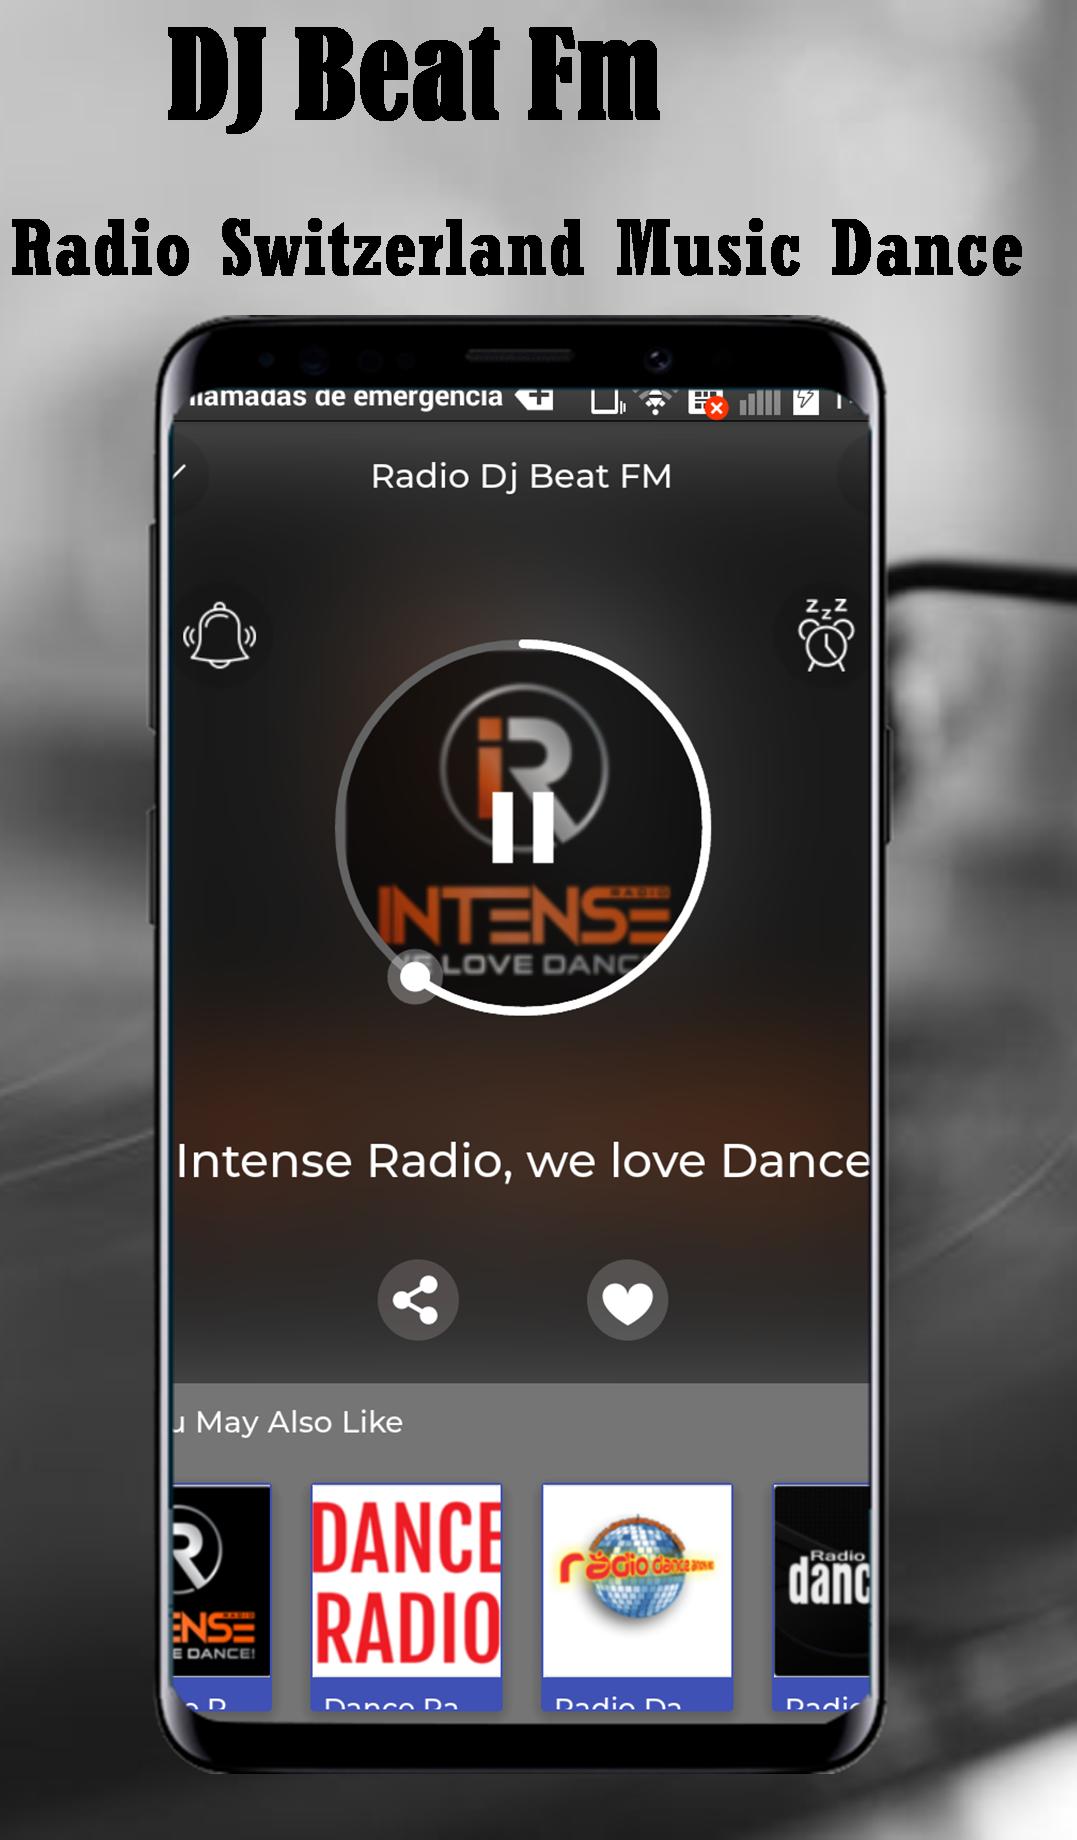 DJ Beat Fm Radio Switzerland Music Dance for Android - APK Download